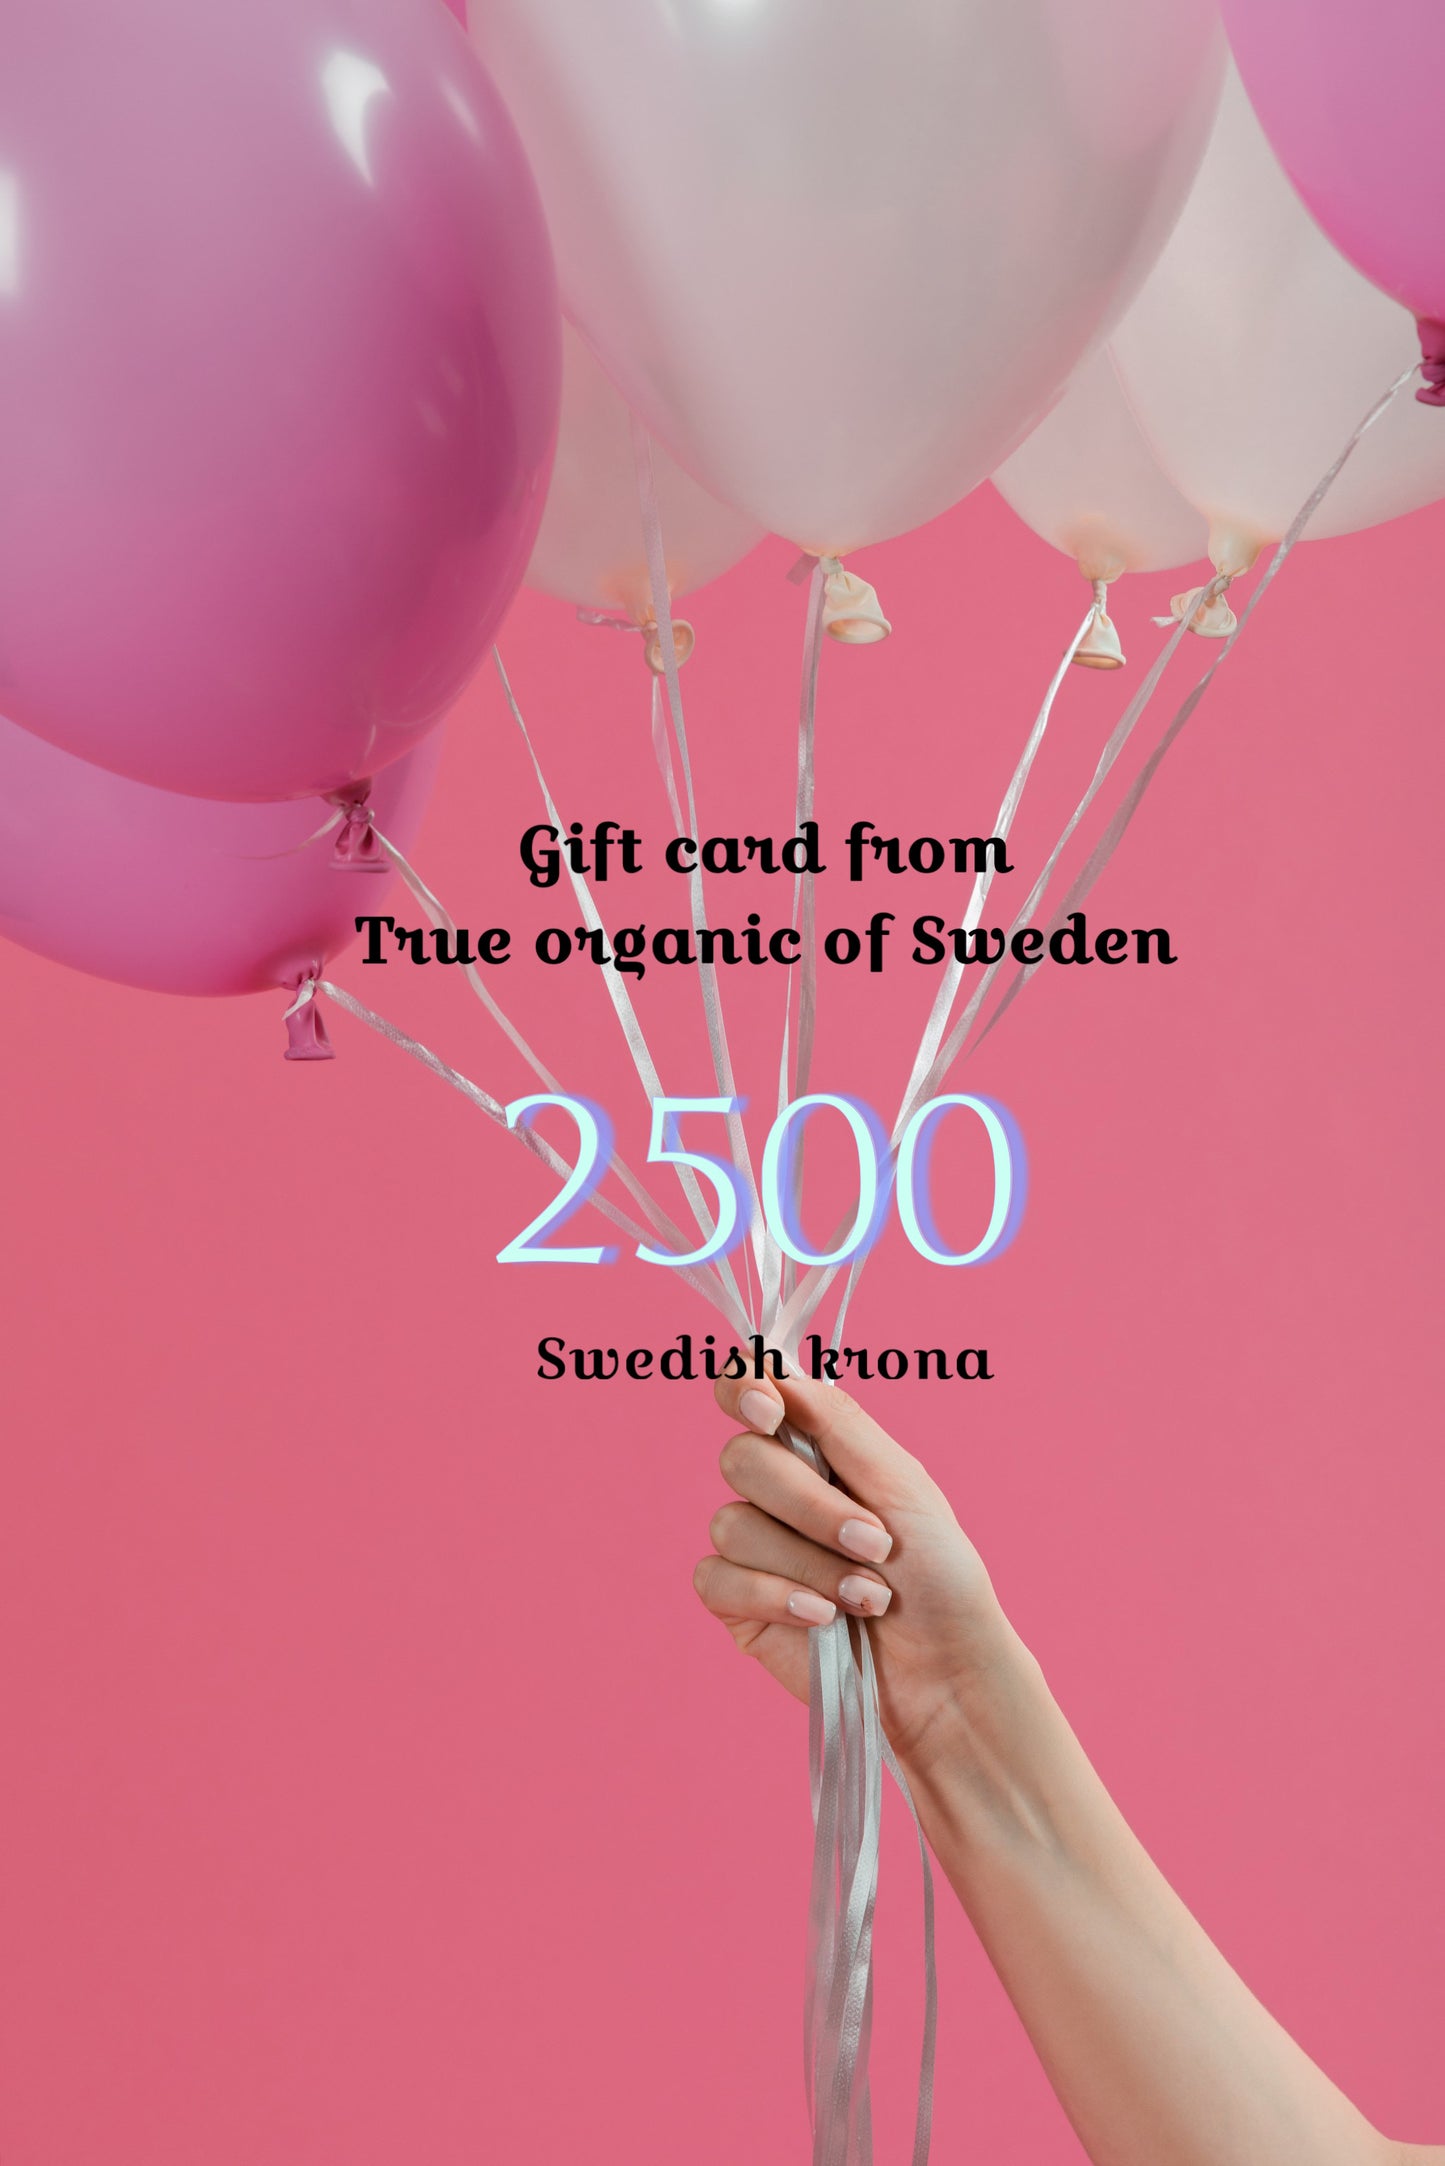 Gift card from True organic of Sweden 2500 krona 